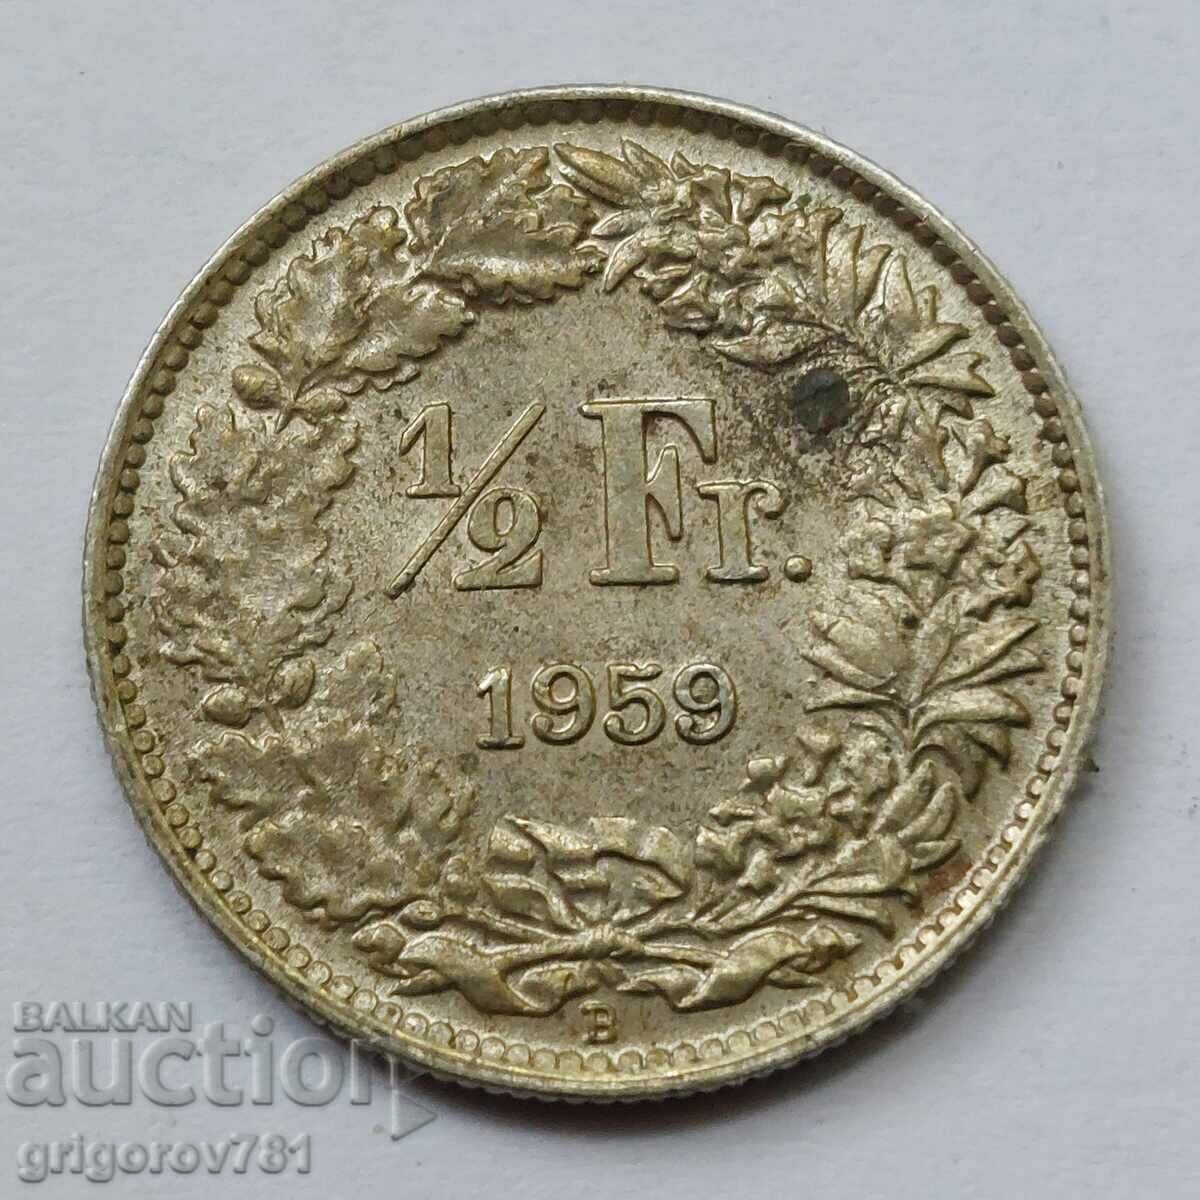 1/2 Franc Silver Switzerland 1959 B - Silver Coin #7